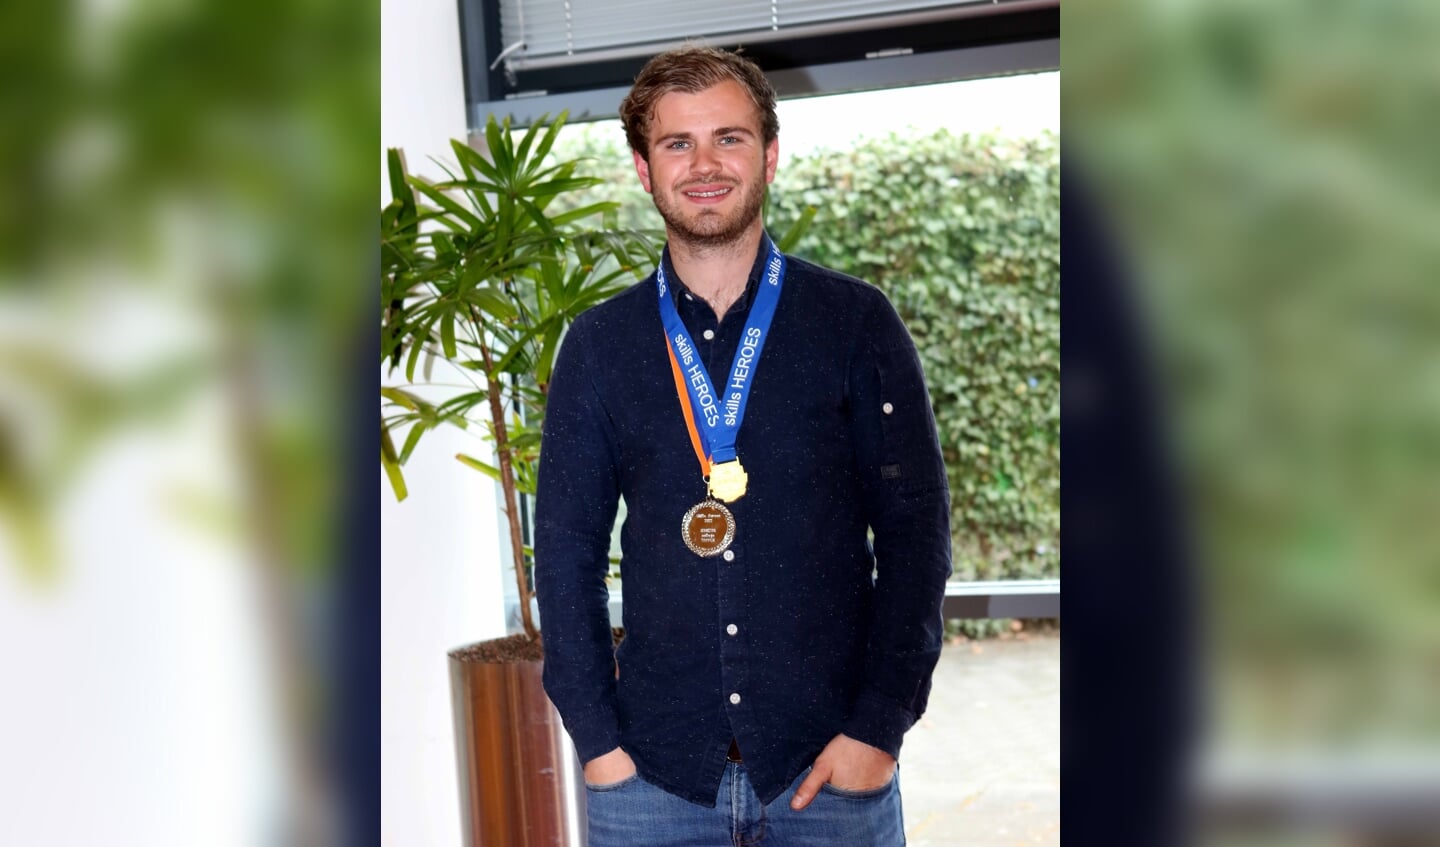 Sam Strijbis uit Dirkshorn werd onverwachts kampioen sanitair- en verwarmingstechnicus 